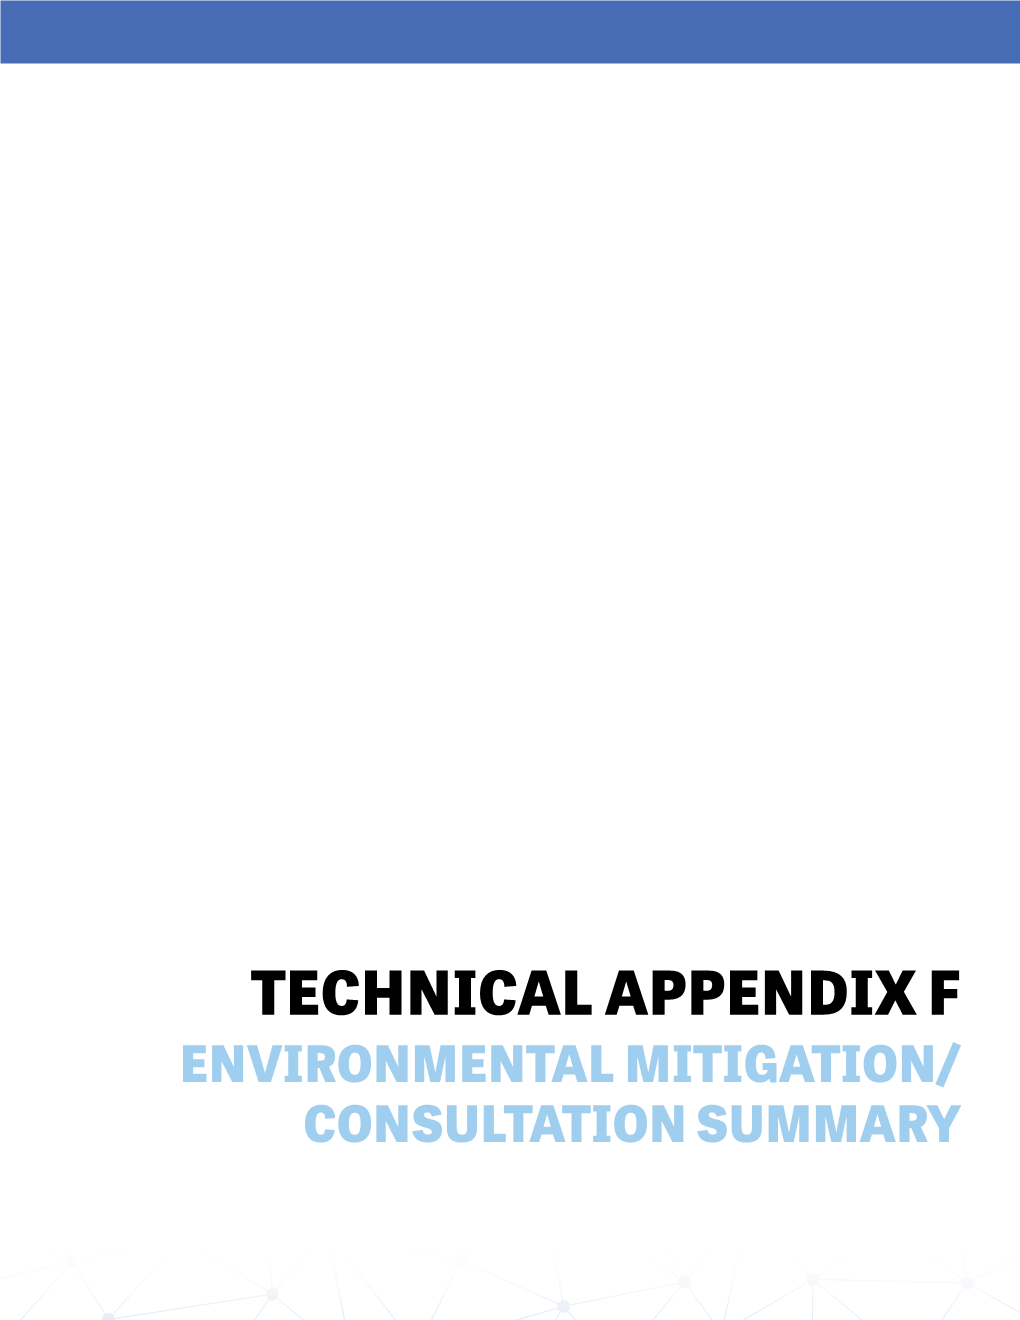 Technical Appendix F: Environmental Mitigation/Consultation Summary